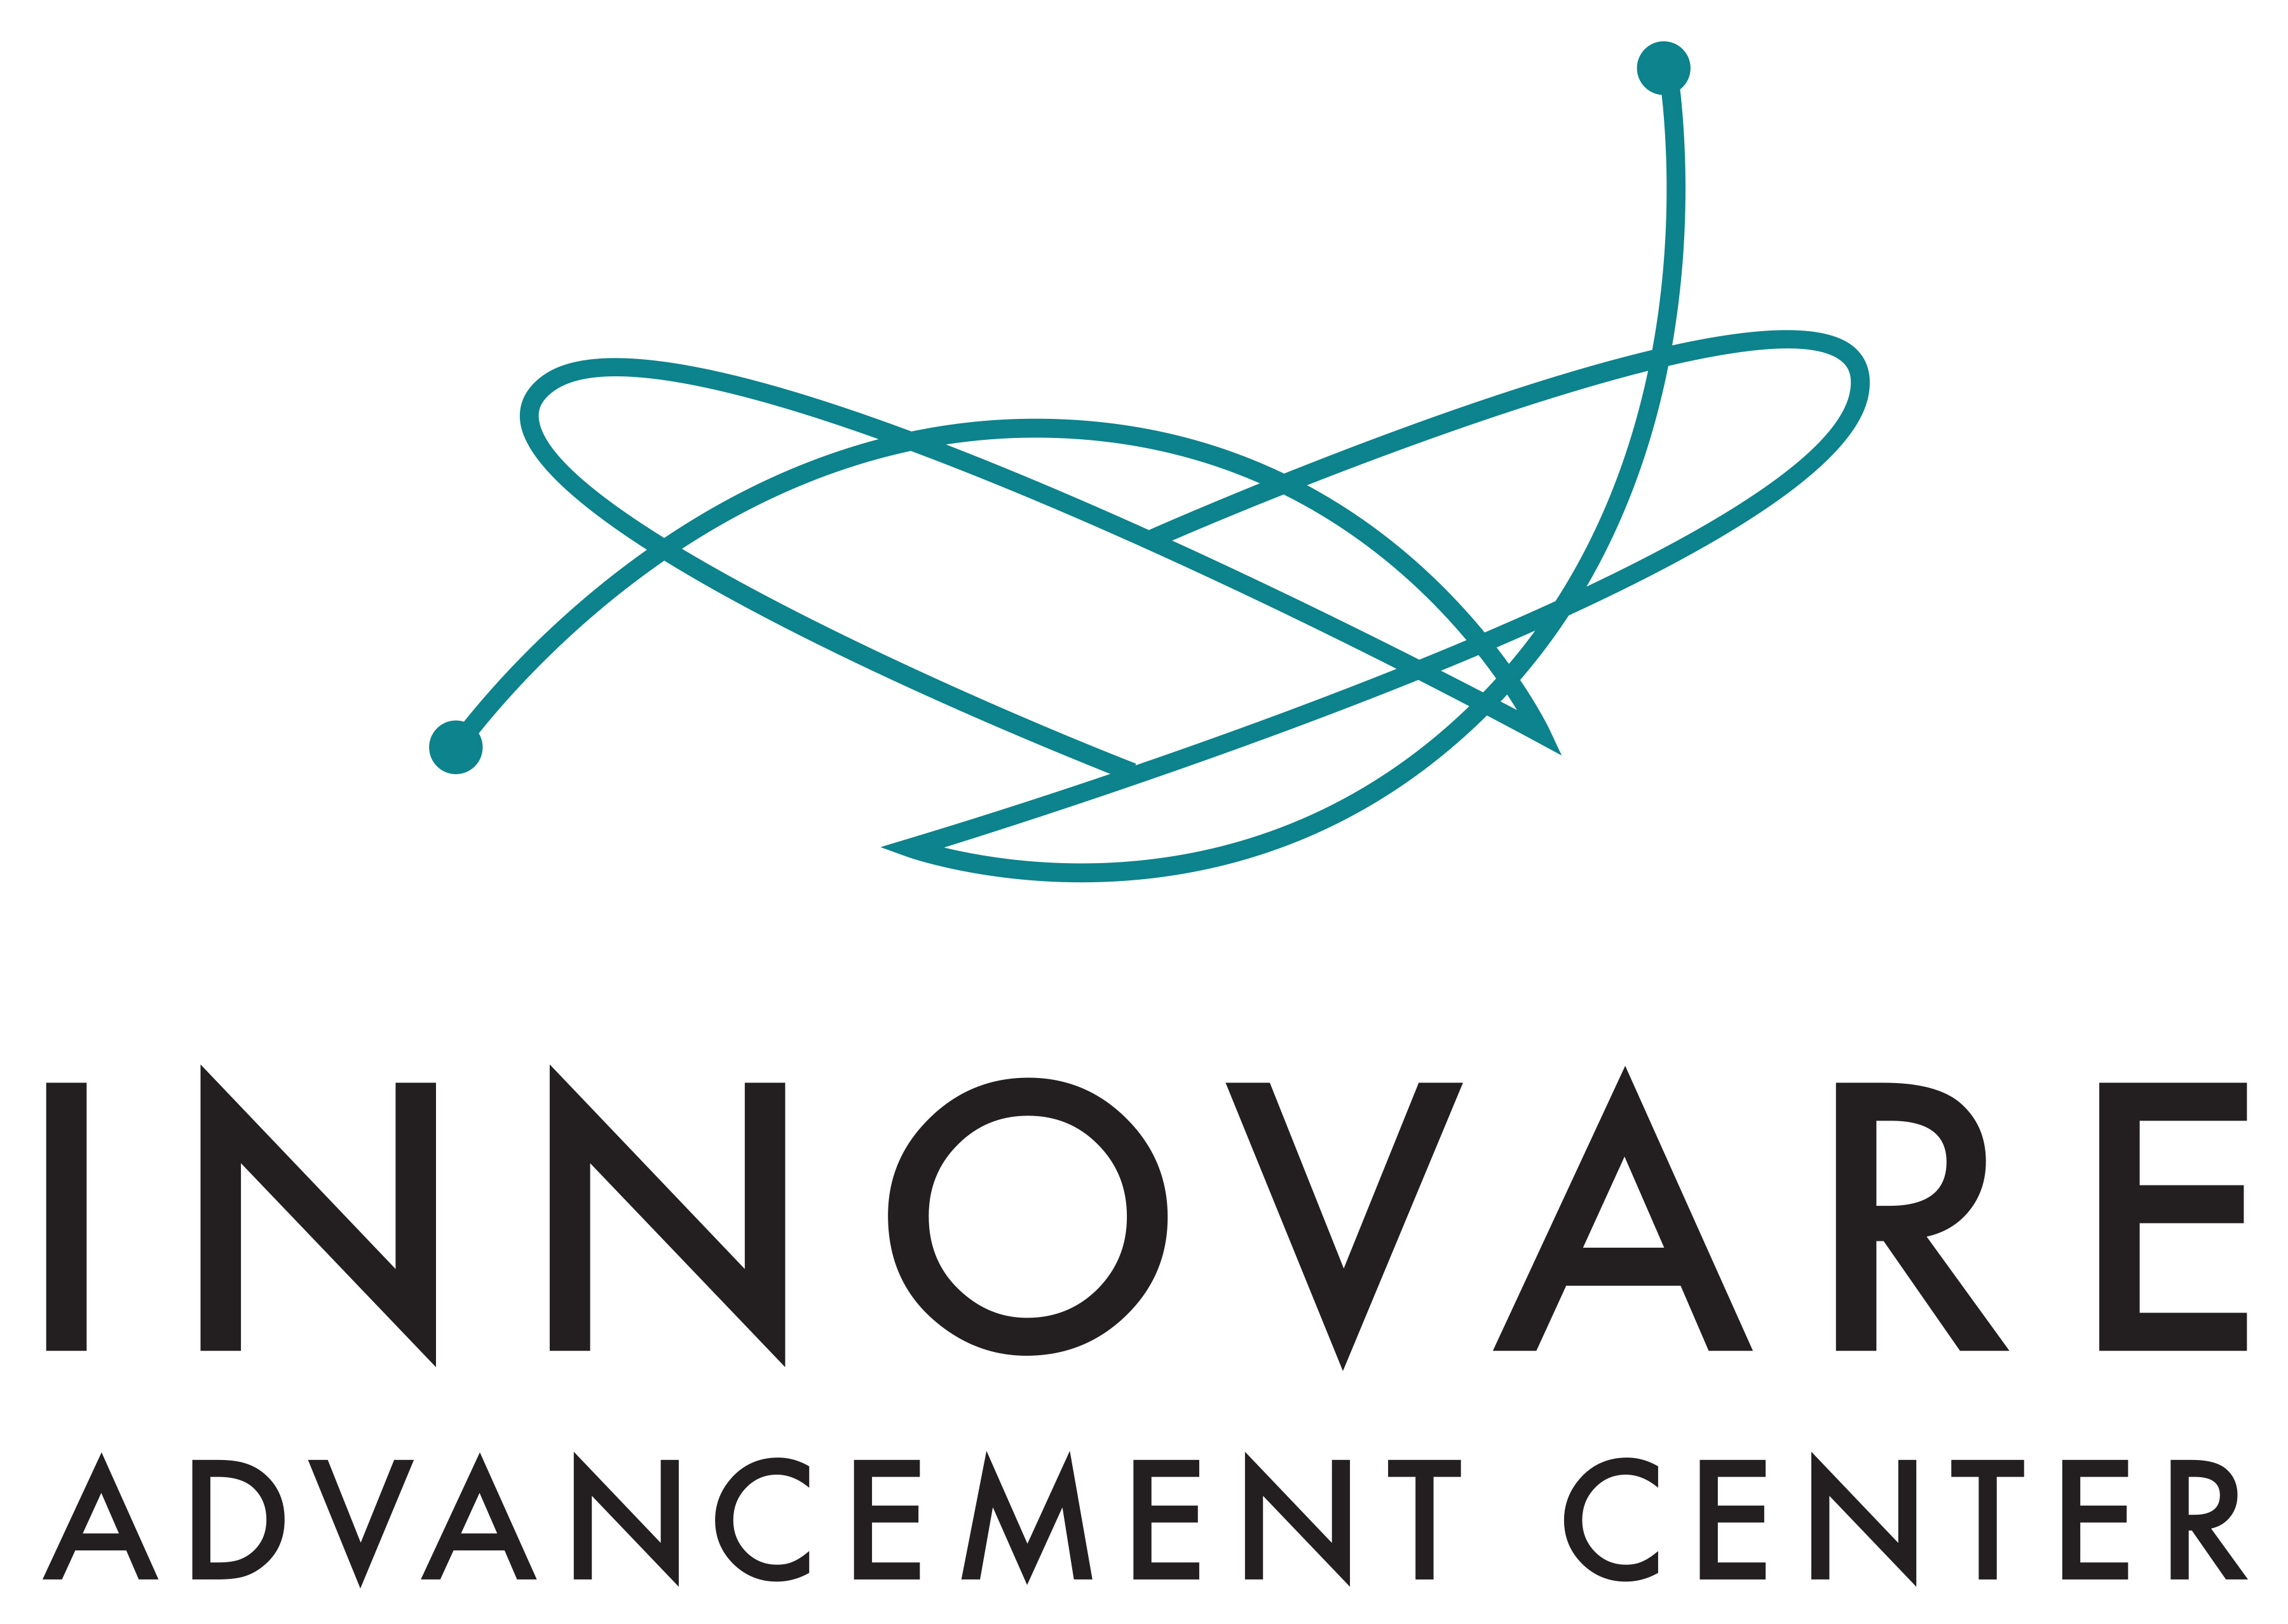 Innovare Advancement Center